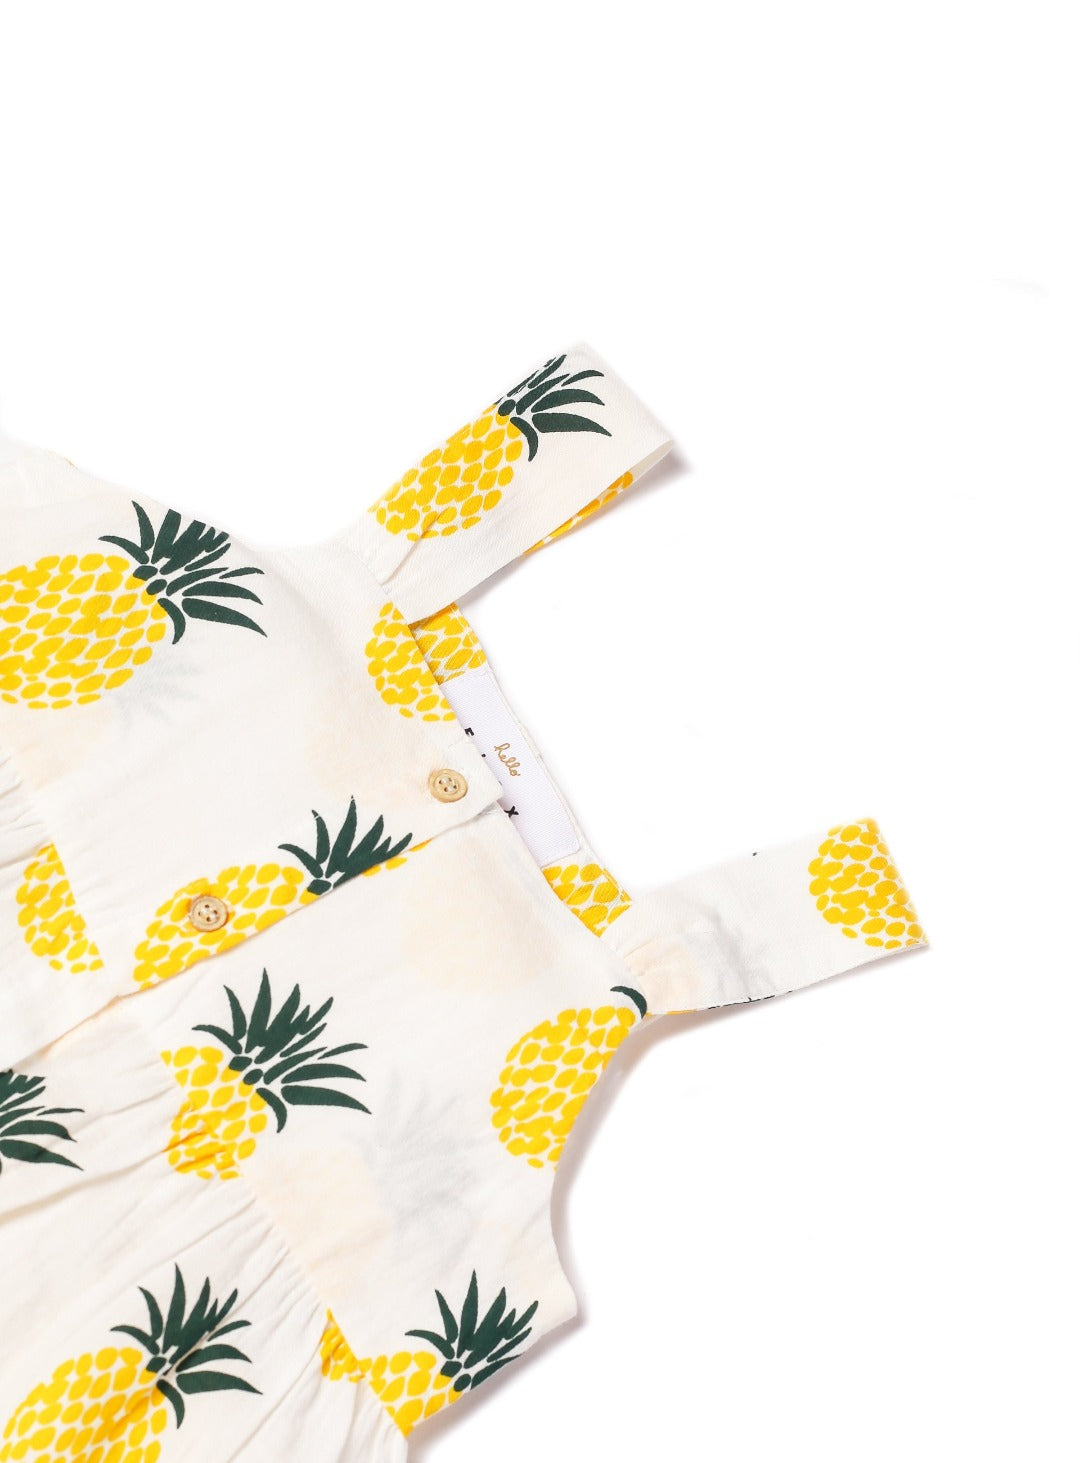 petite yellow pineapple print dress